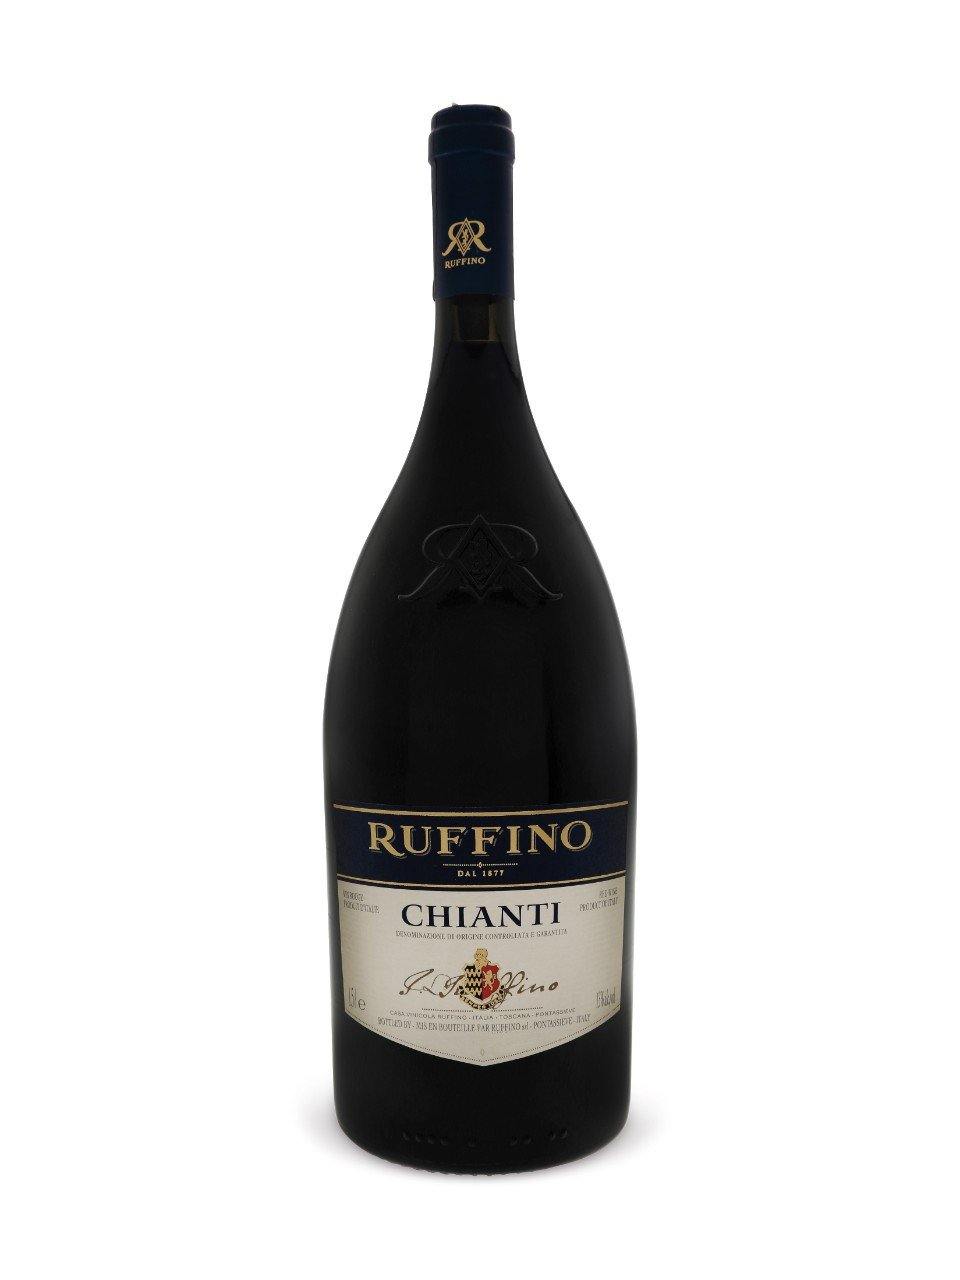 Ruffino Chianti 1500 mL bottle - Speedy Booze